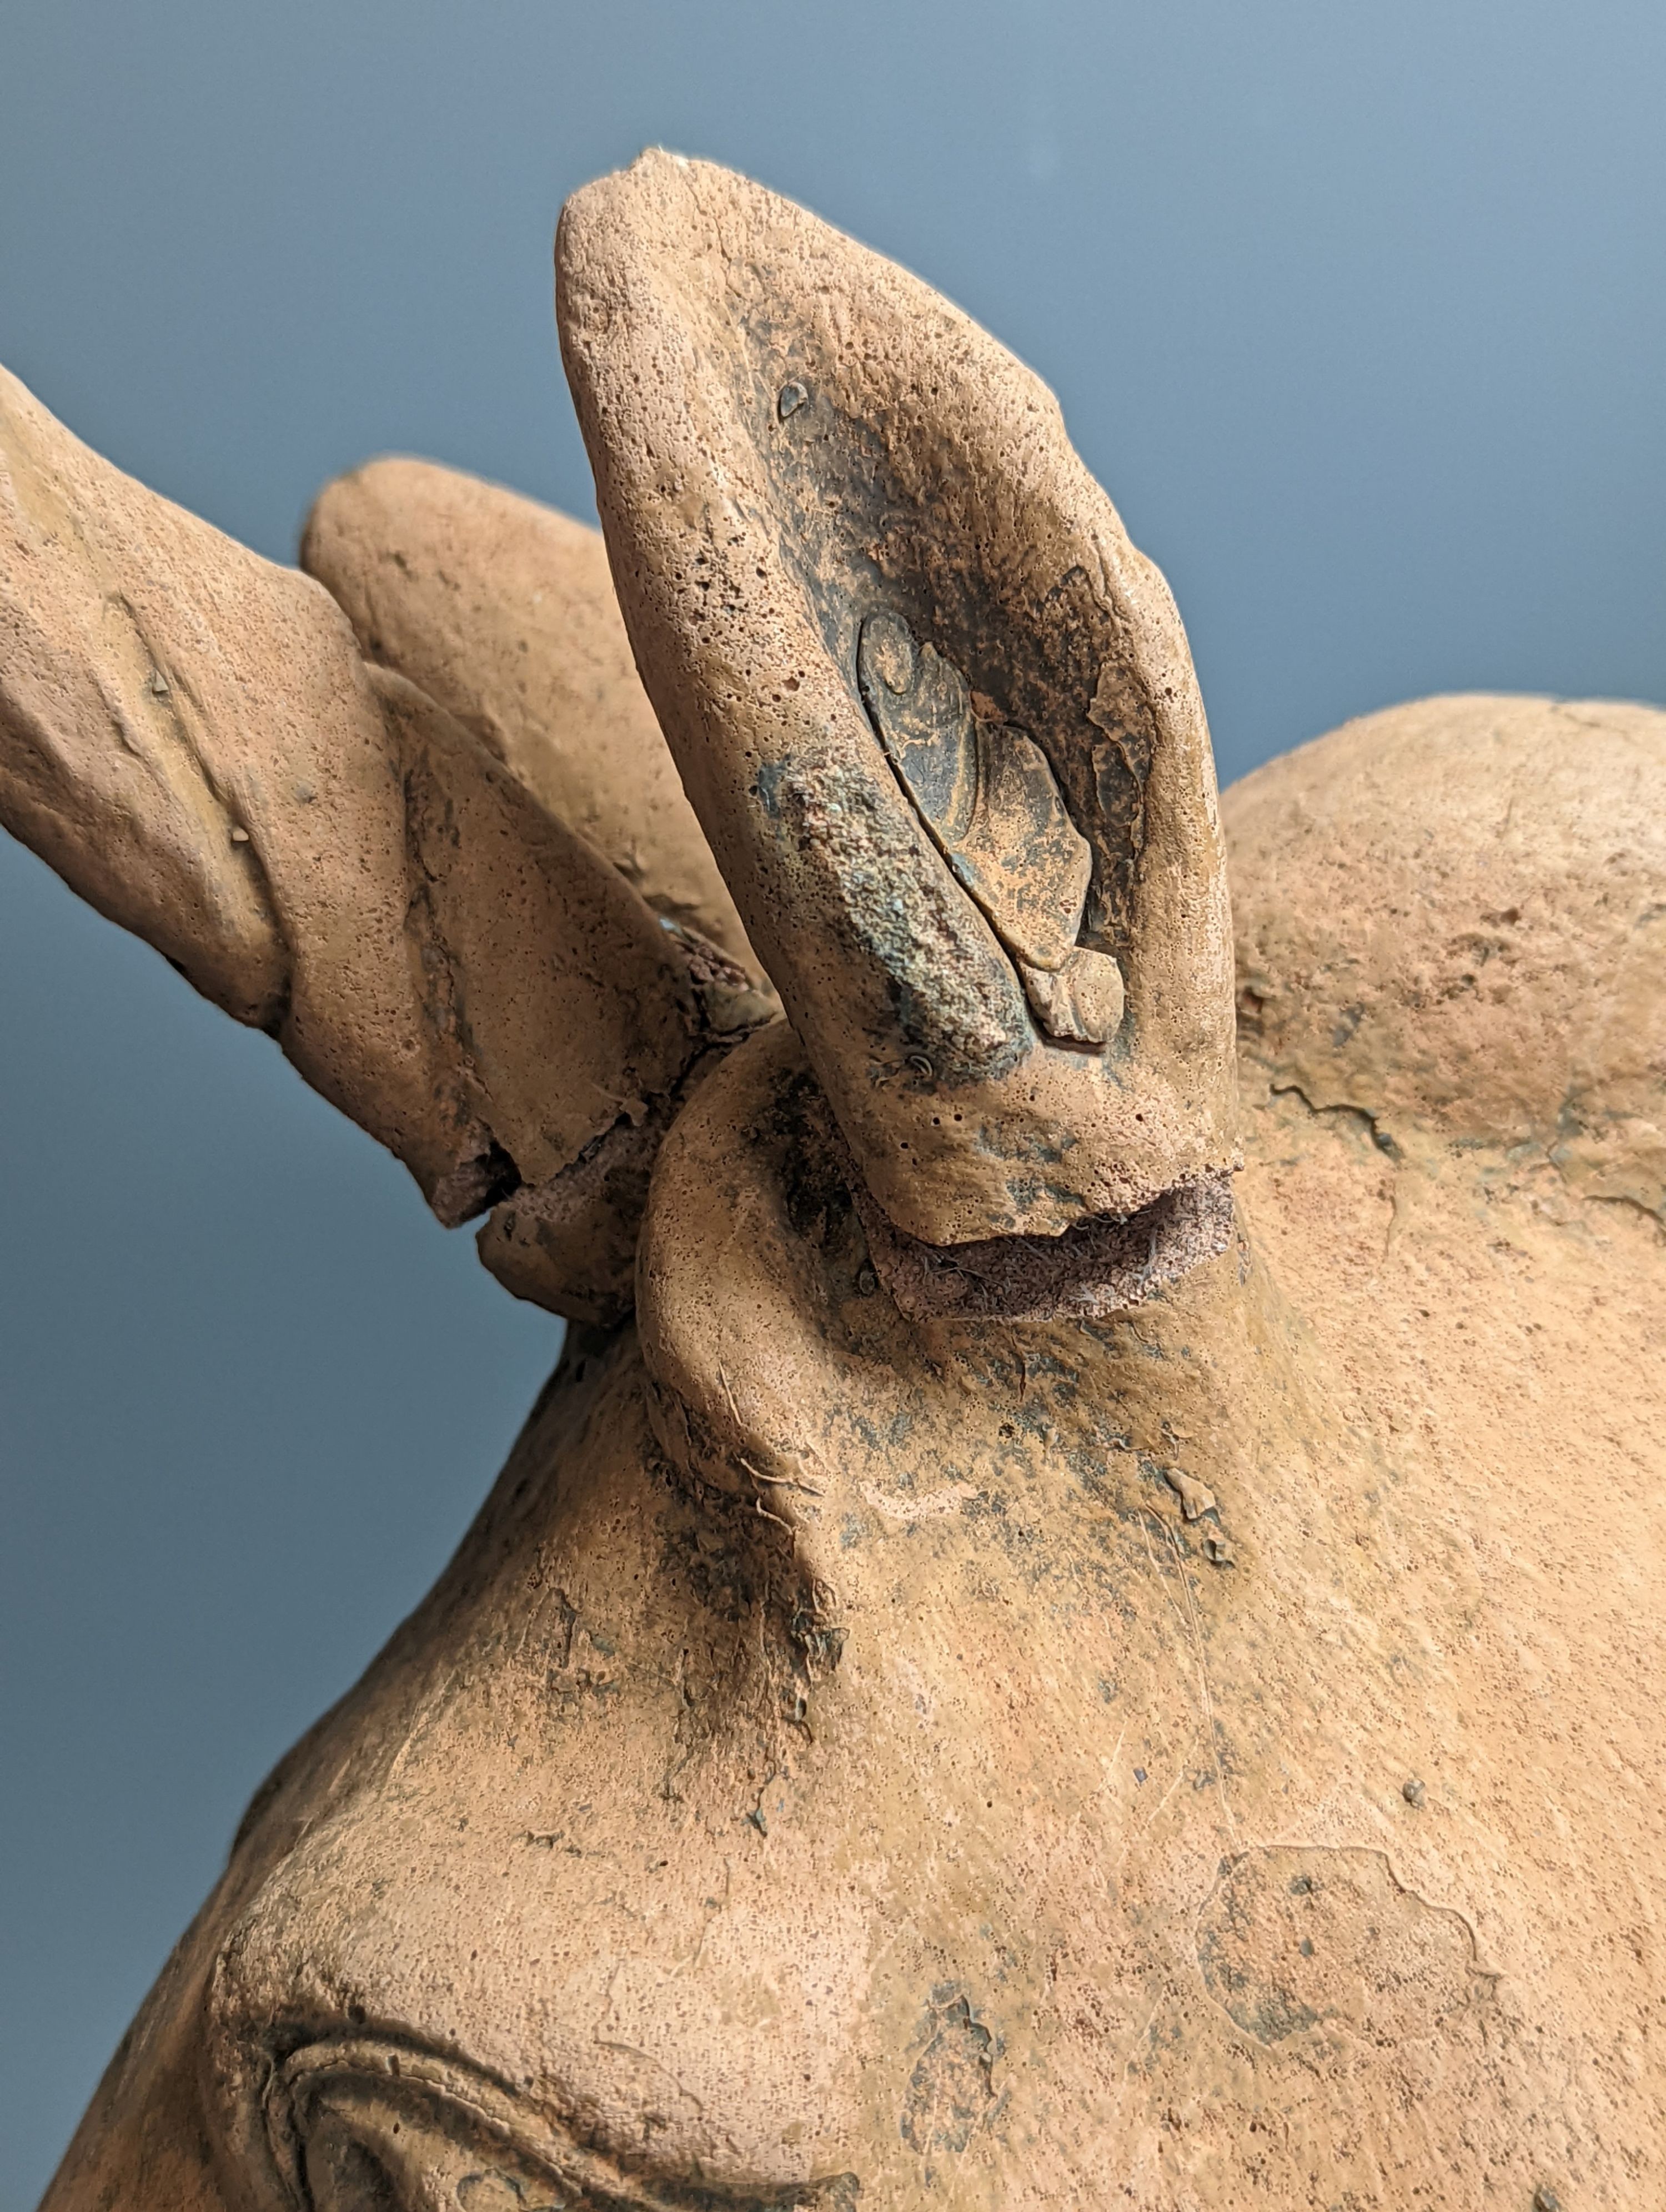 A Terracotta model of a unicorn head 45cm